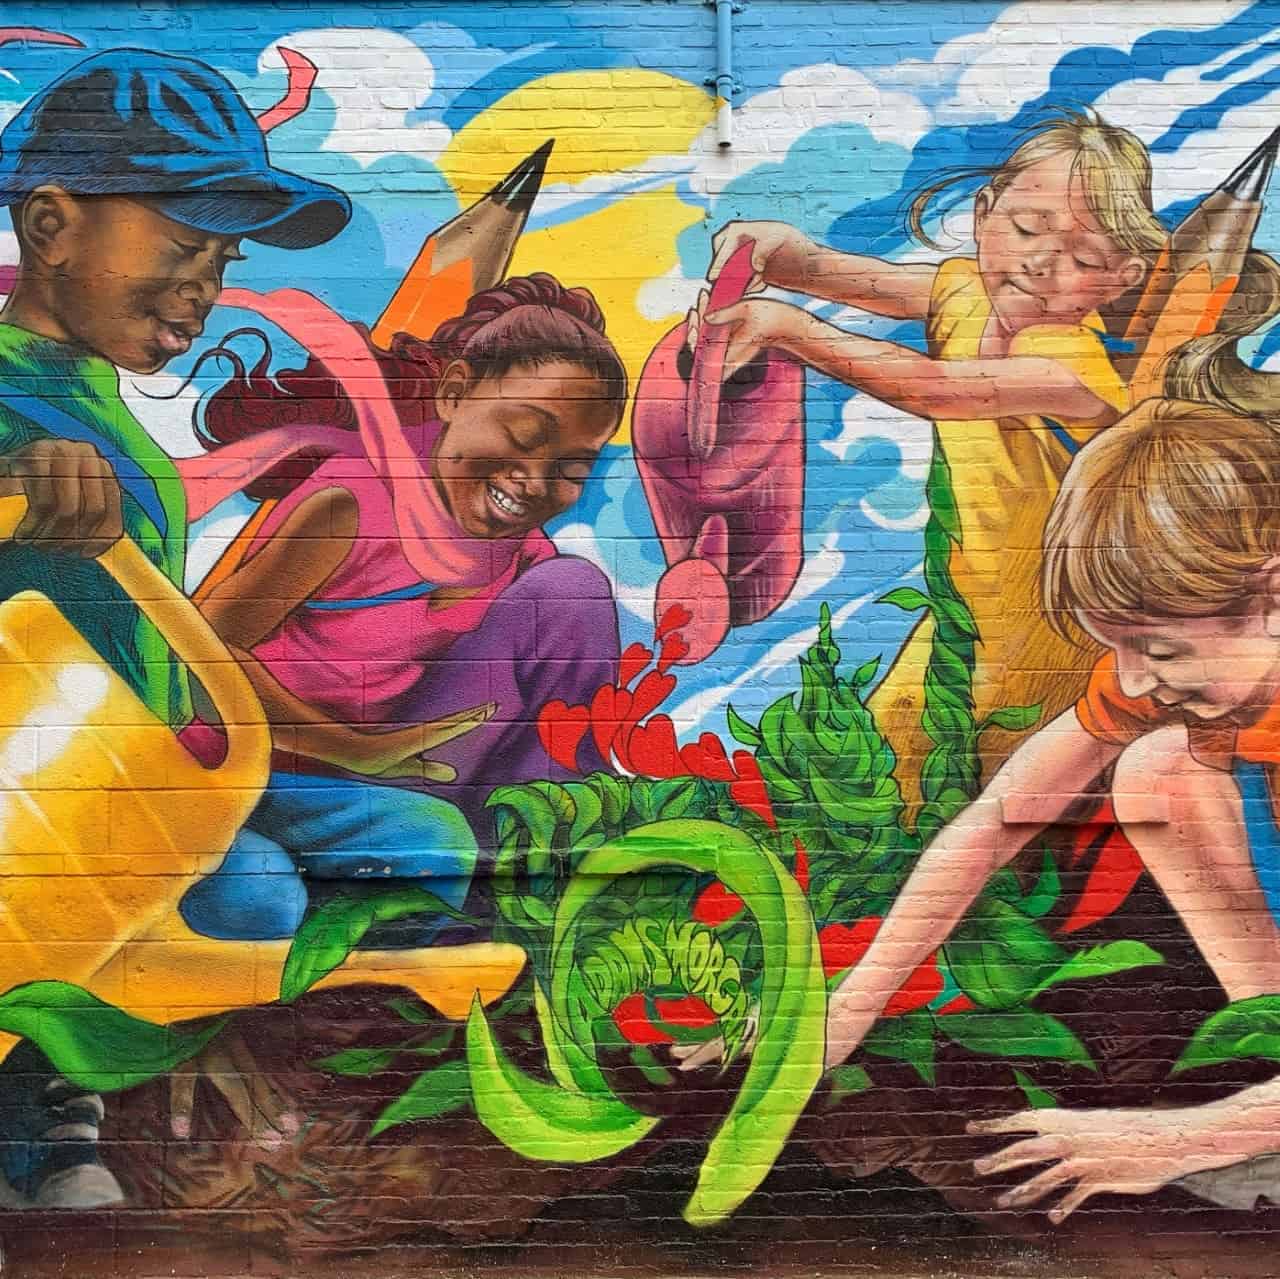 mural of kids planting a garden together